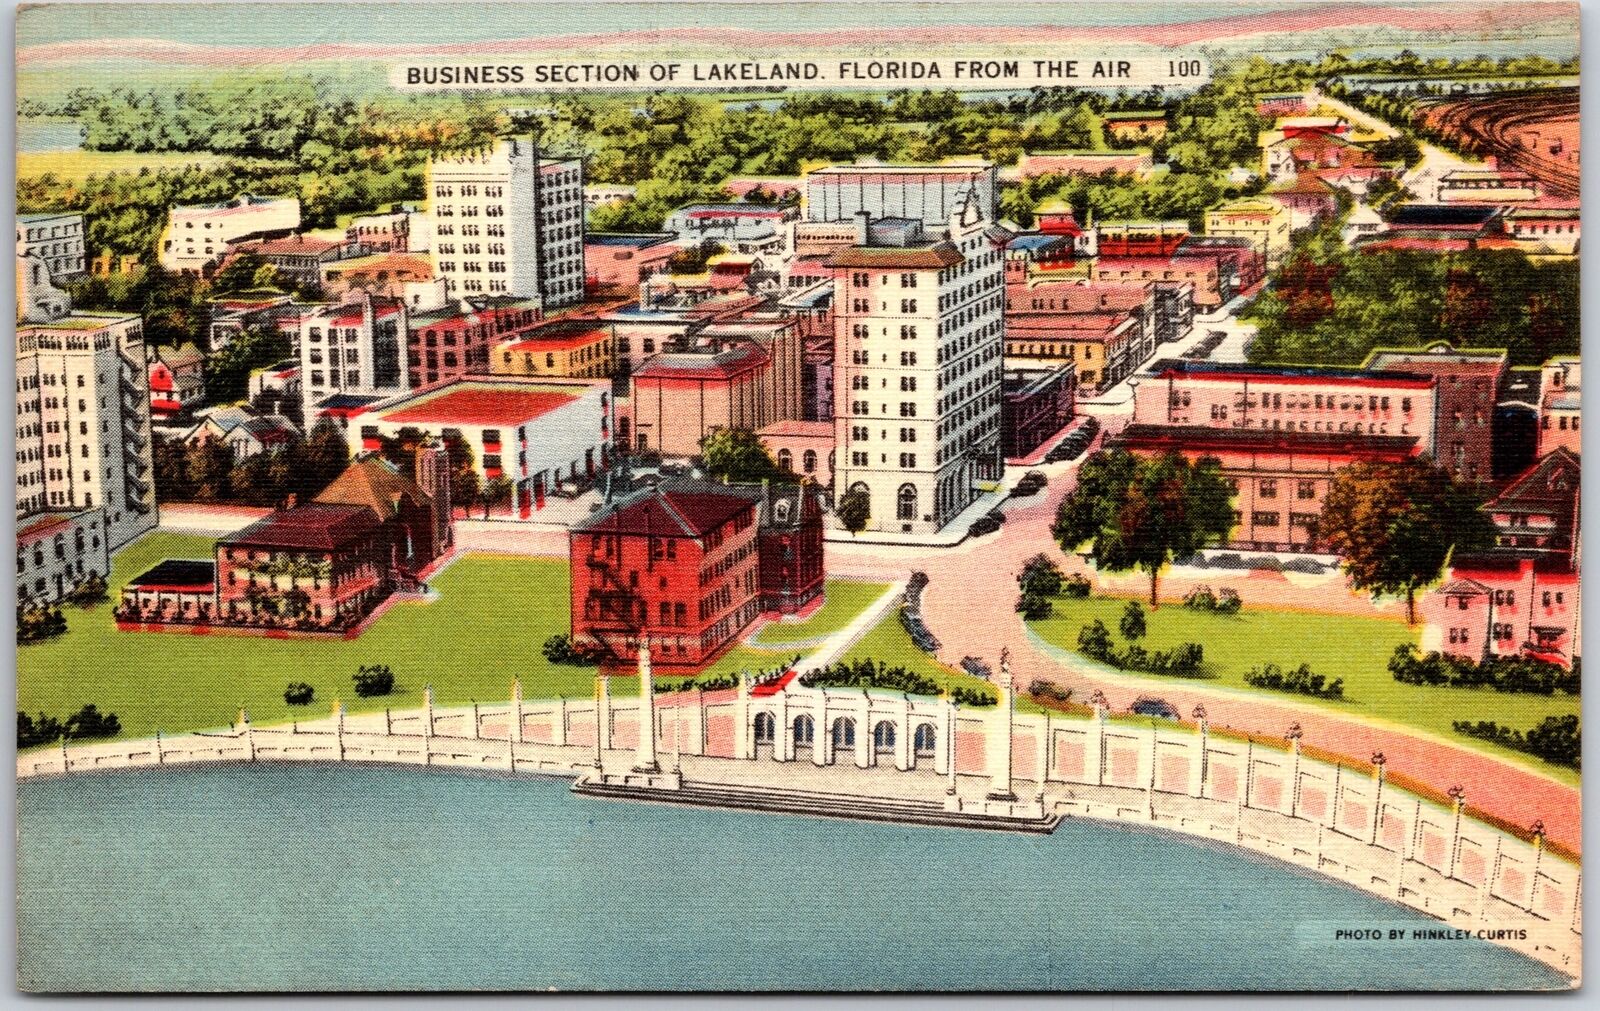 Lakeland Florida FL, 1959 Business Section, Buildings, Lake, Vintage Postcard